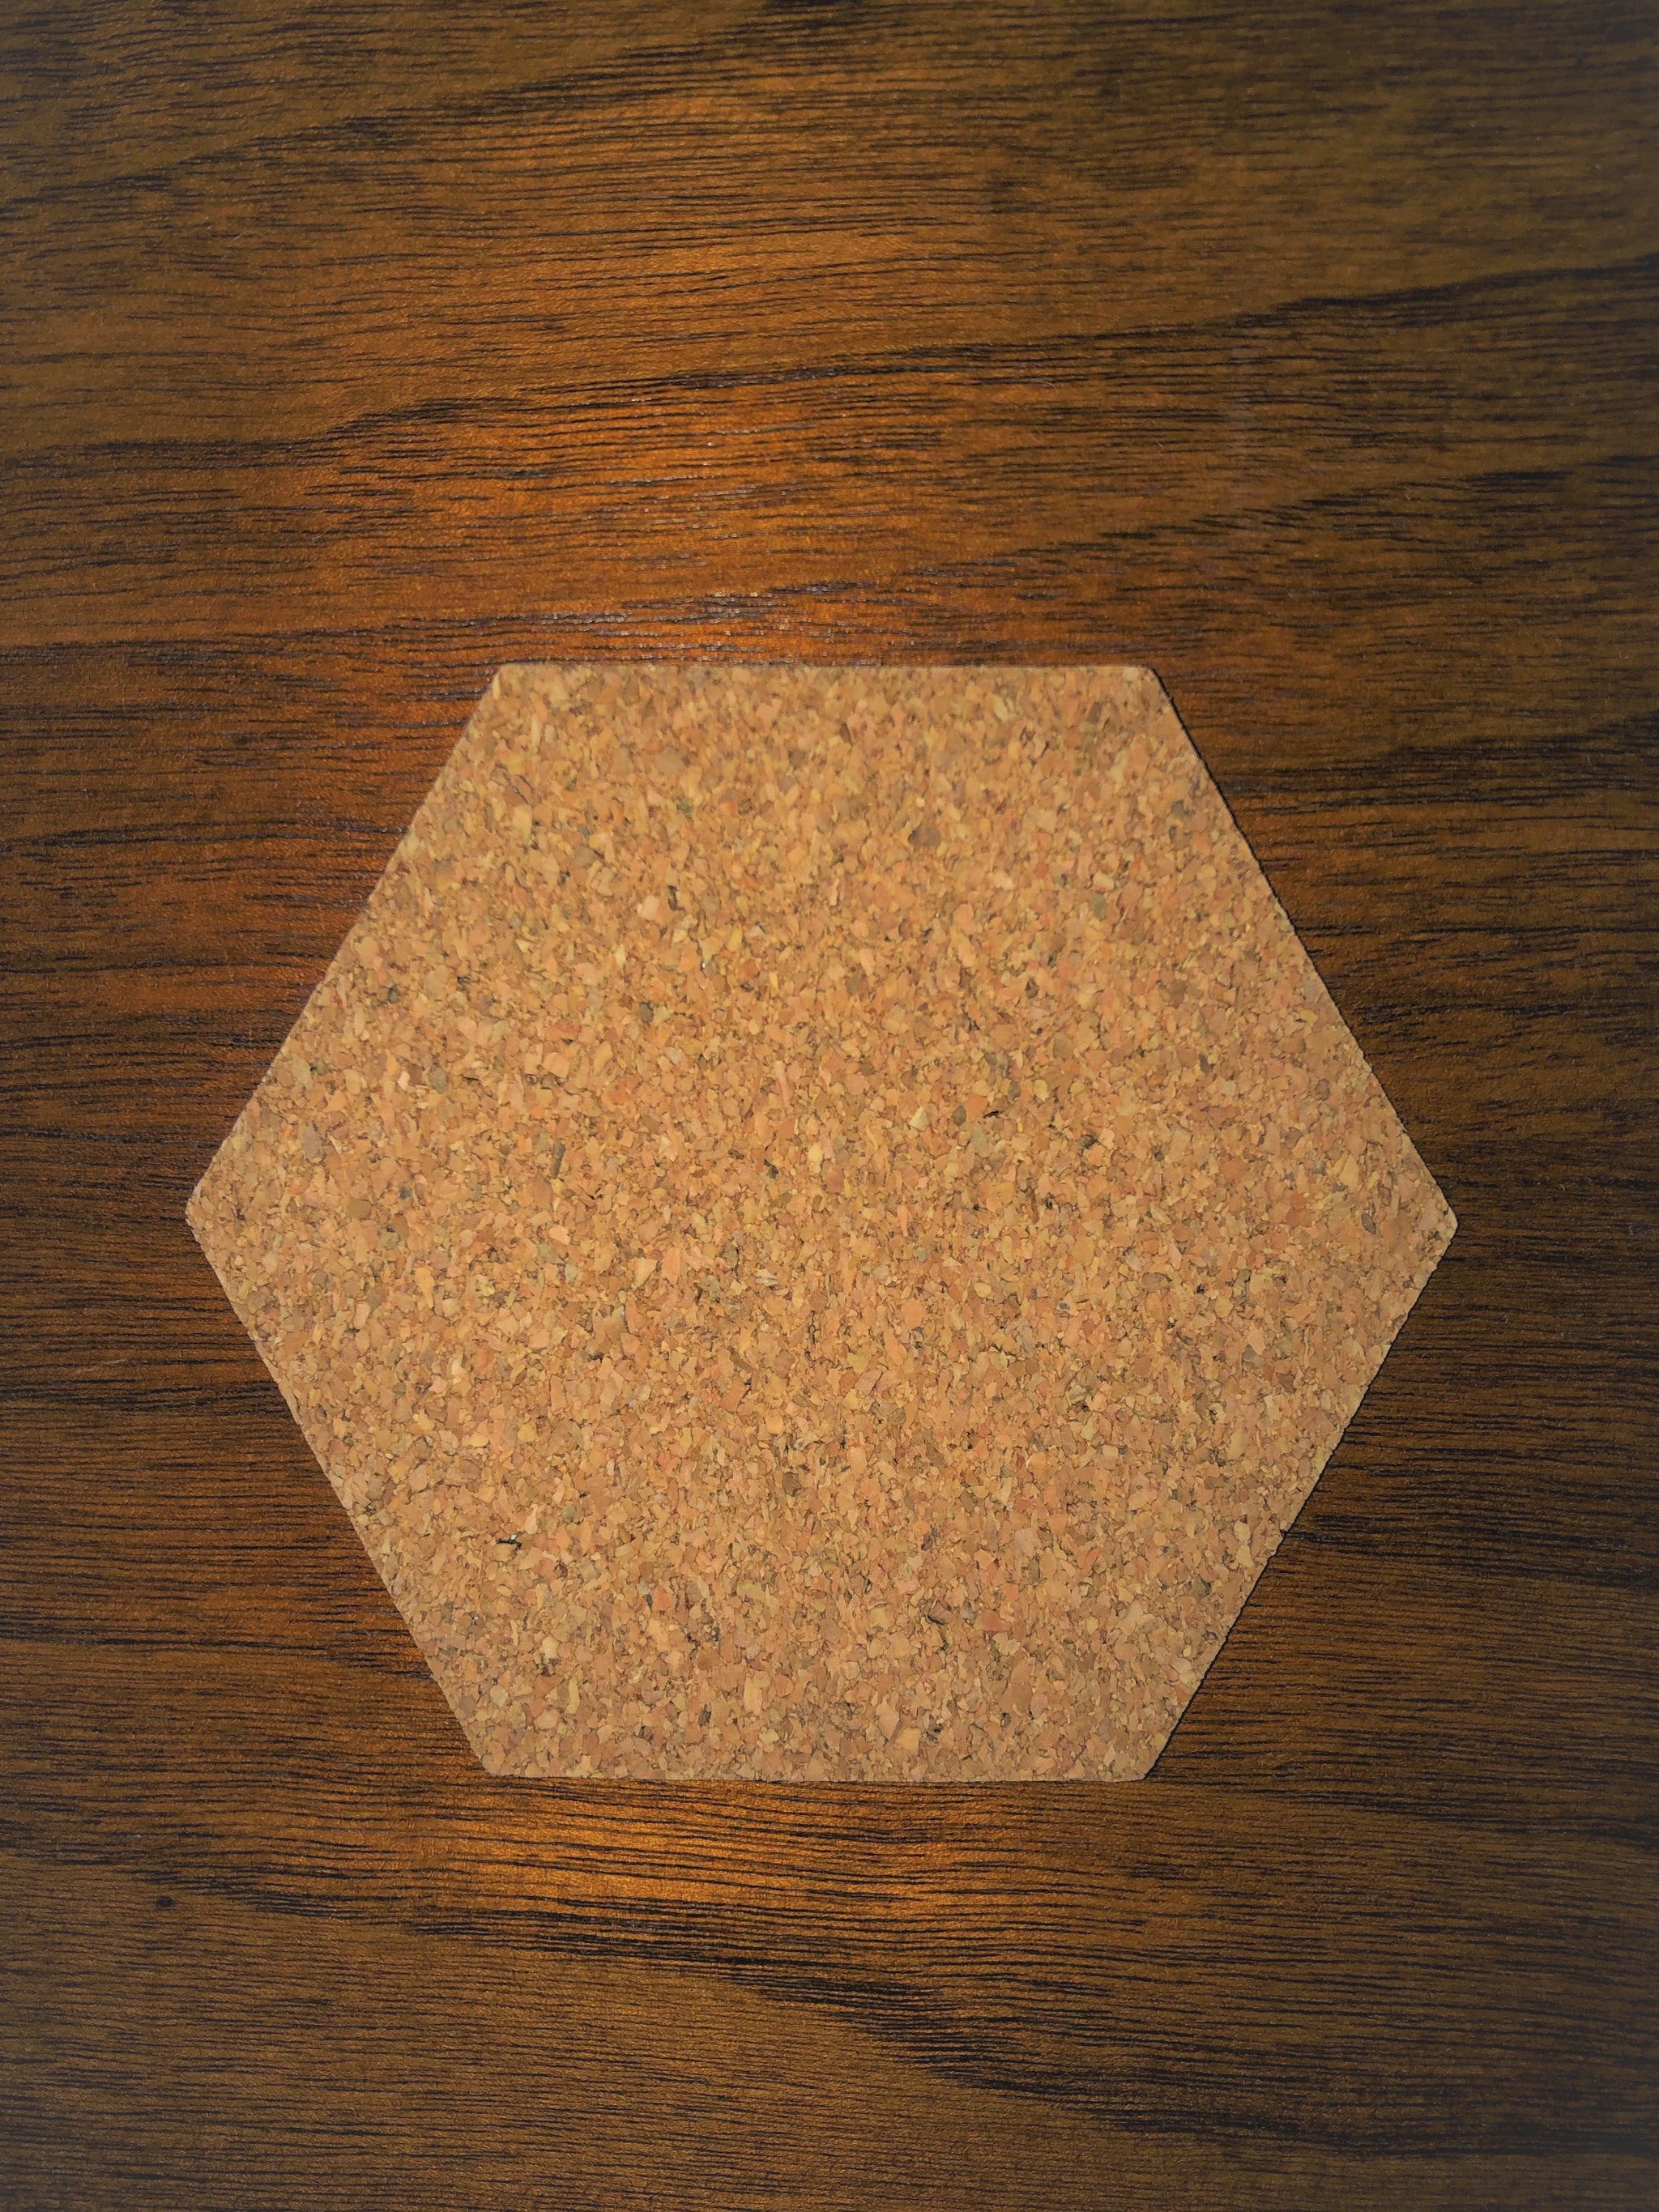 Adhesive Cork Hexagons- 3 7/8" x 3 3/8" (100 piece minimum)